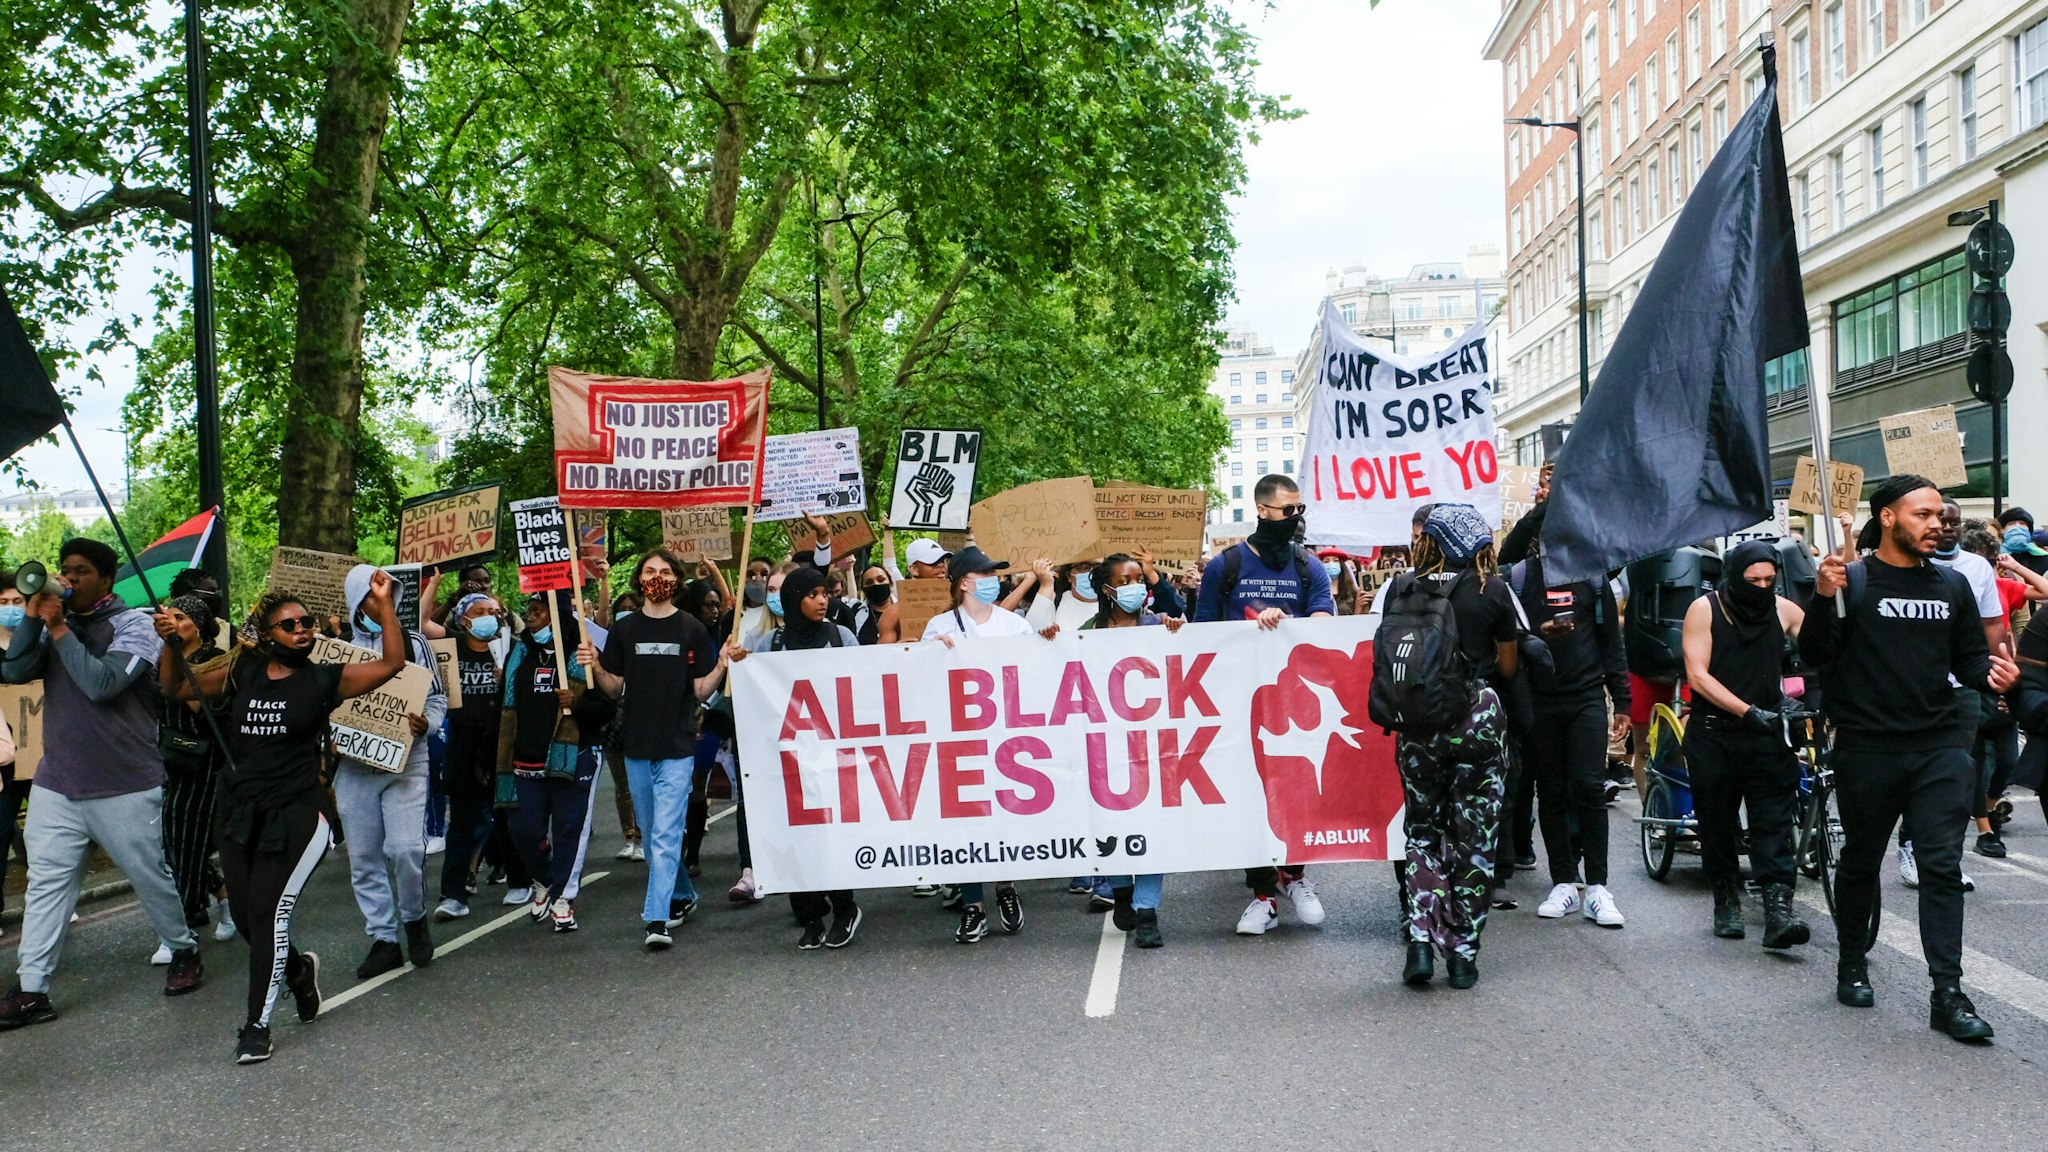 LONDON, UNITED KINGDOM - JULY 19, 2020 - Black Lives Matter protest march in central London